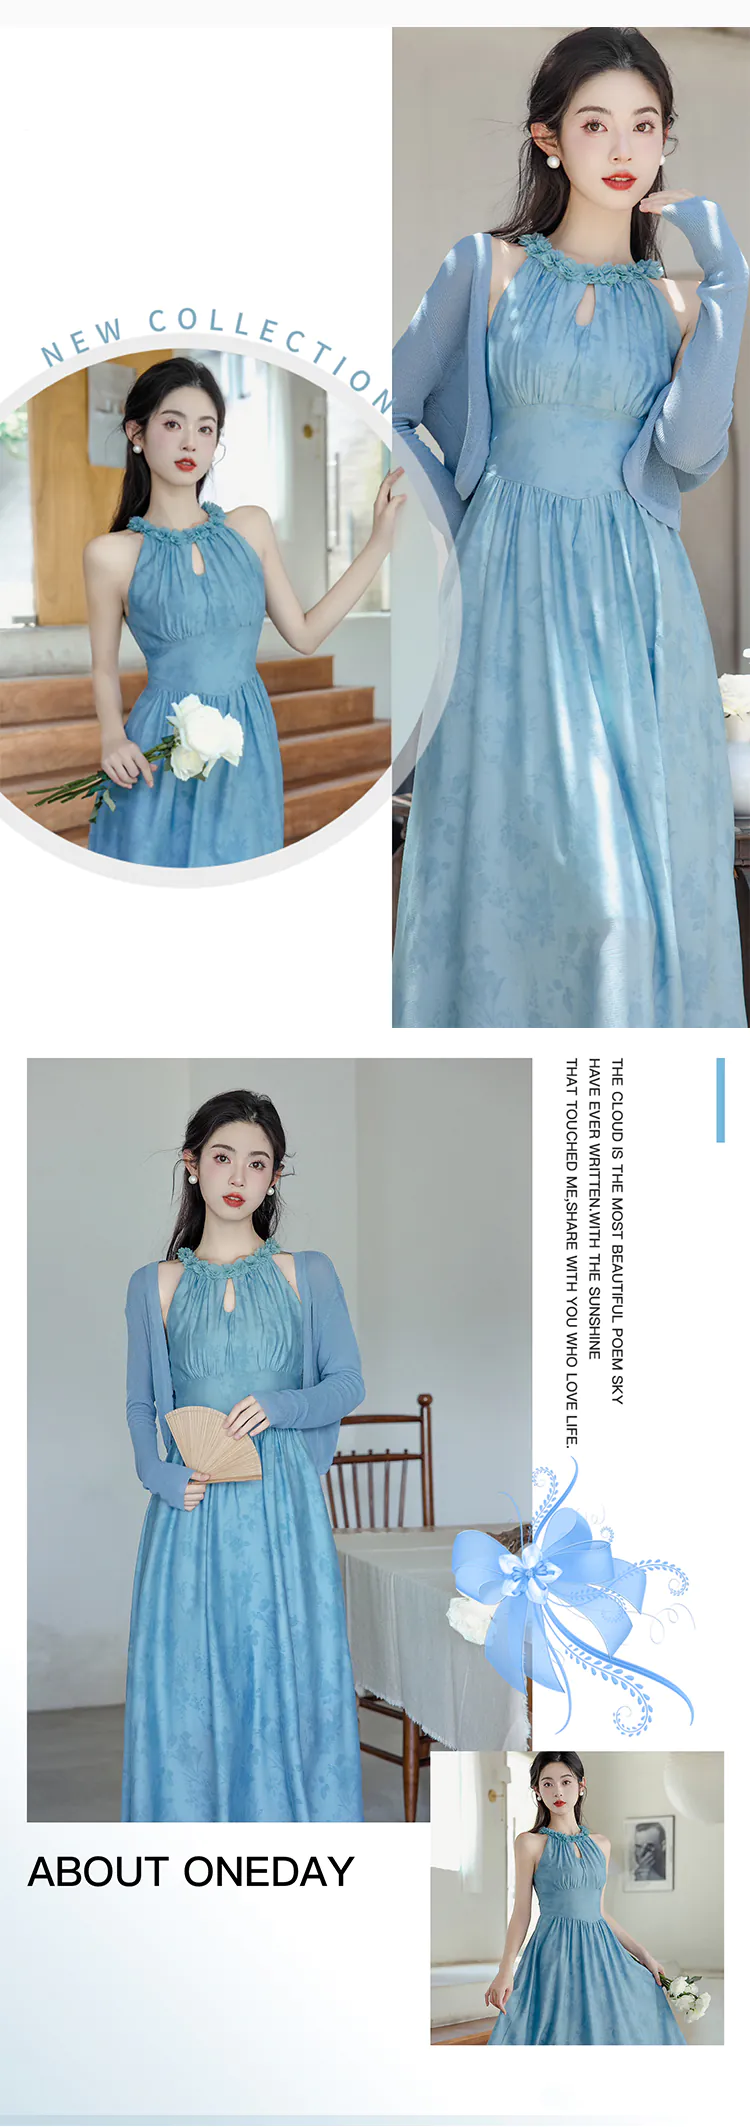 Sweet-Soft-Blue-Flower-Printed-Chiffon-Casual-Dress-with-Cardigan-Set10